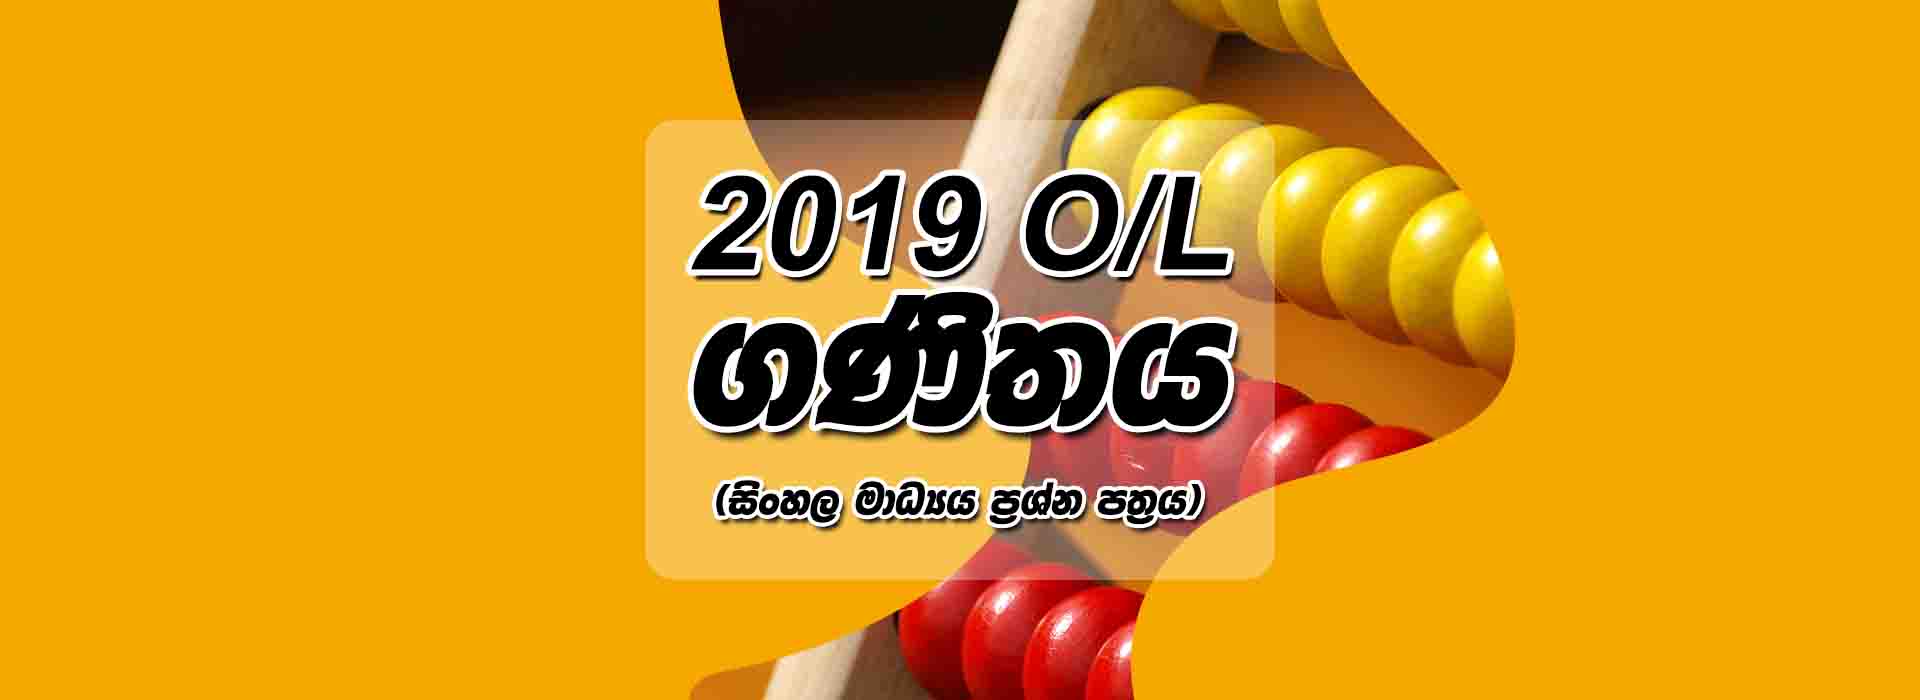 2019 O/L Maths Past Paper Sinhala Medium